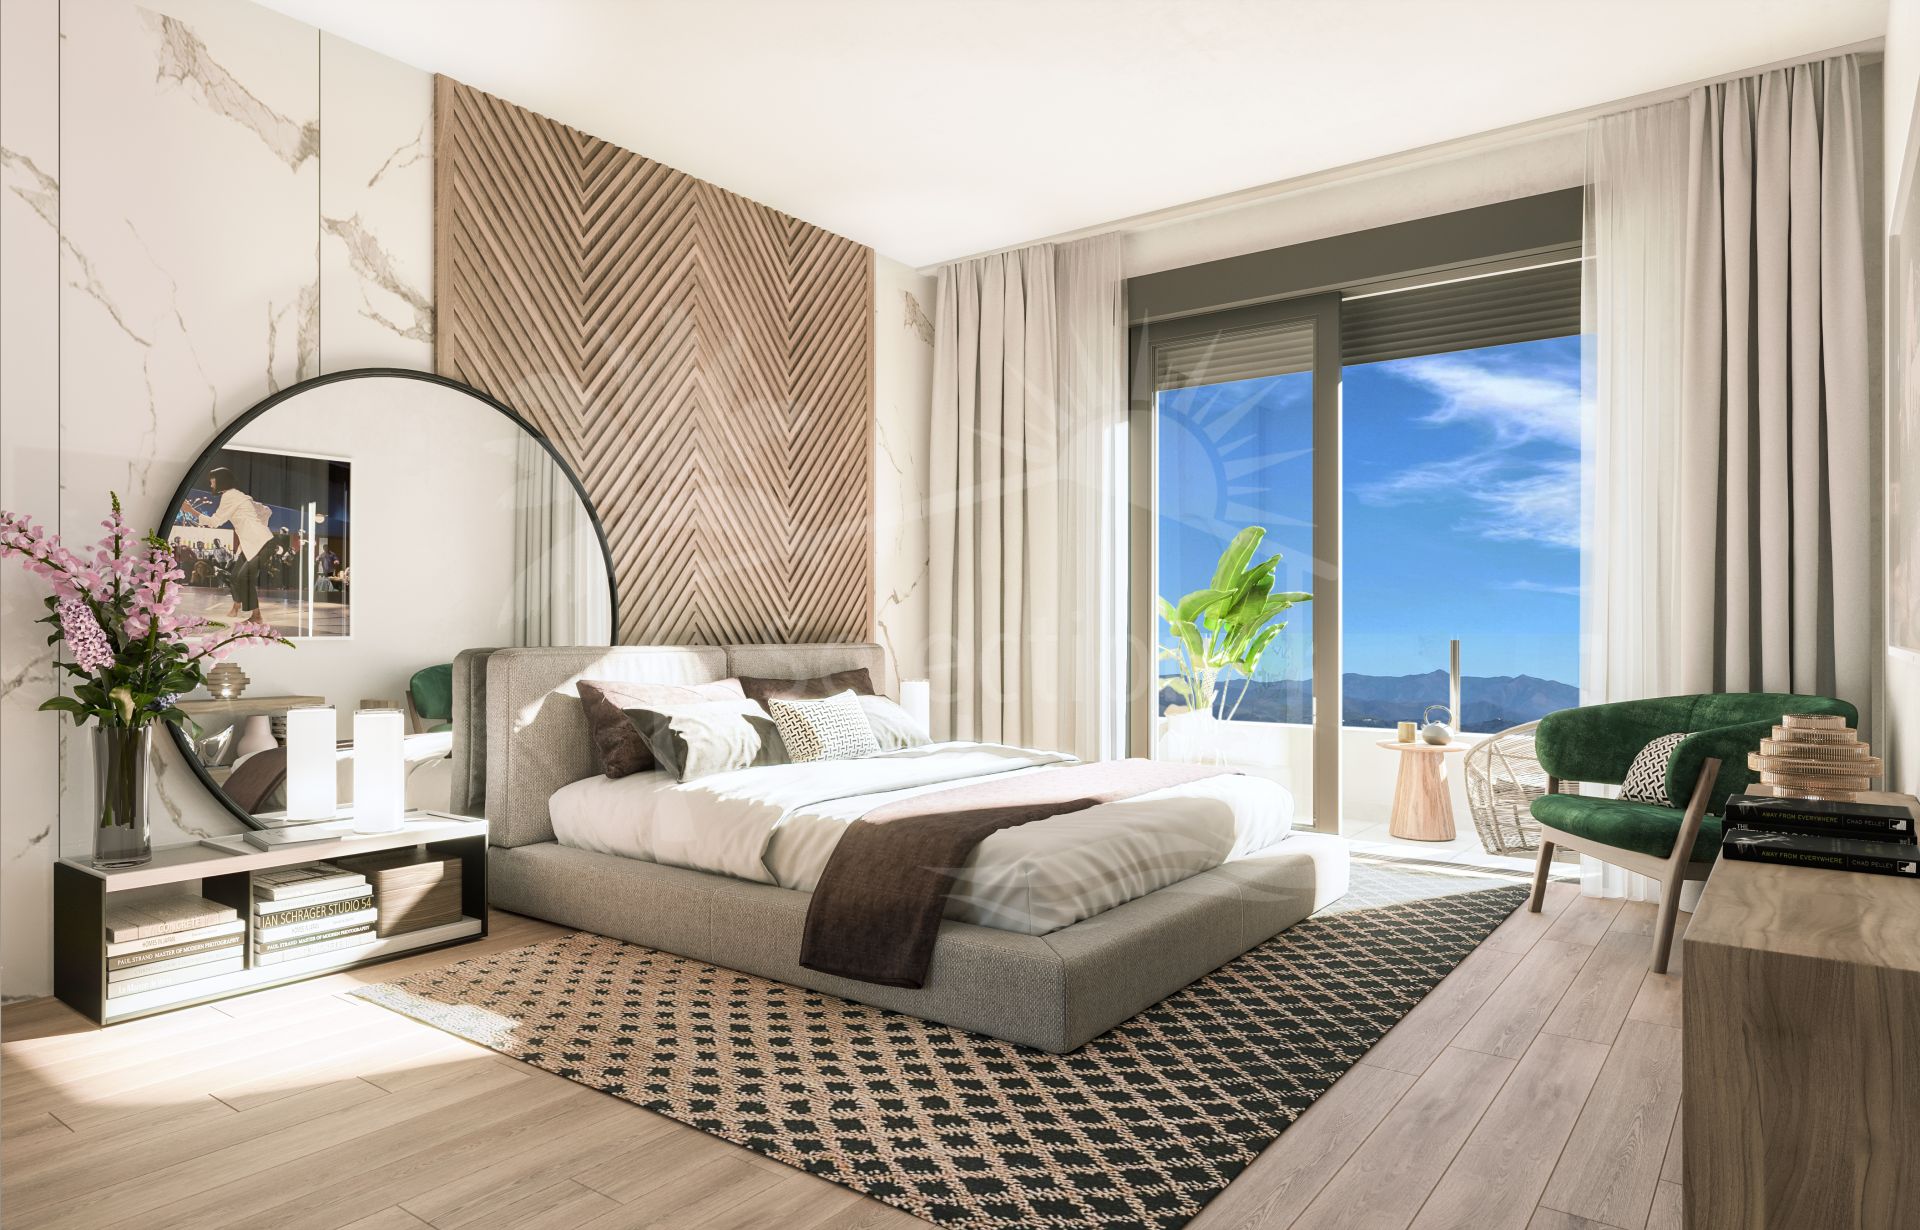 Luxury Brand New 3 Bedroom Penthouse Apartment in Finca Cortesin, Casares.